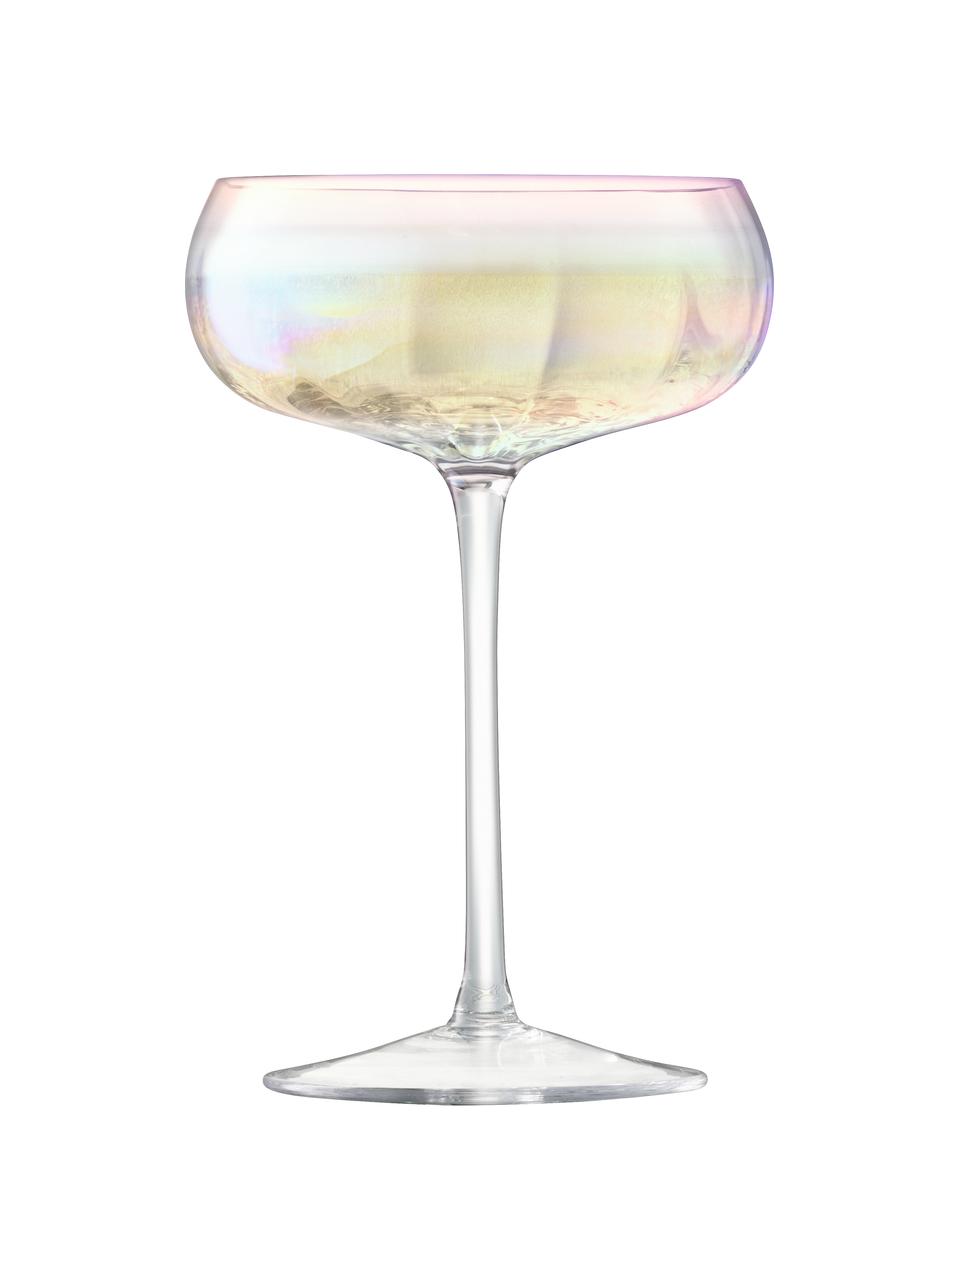 Mondgeblazen champagneglazen Pearl met glinsterende parelmoer glans, 2 stuks, Glas, Transparant, iriserend, Ø 11 x H 16 cm, 300 ml